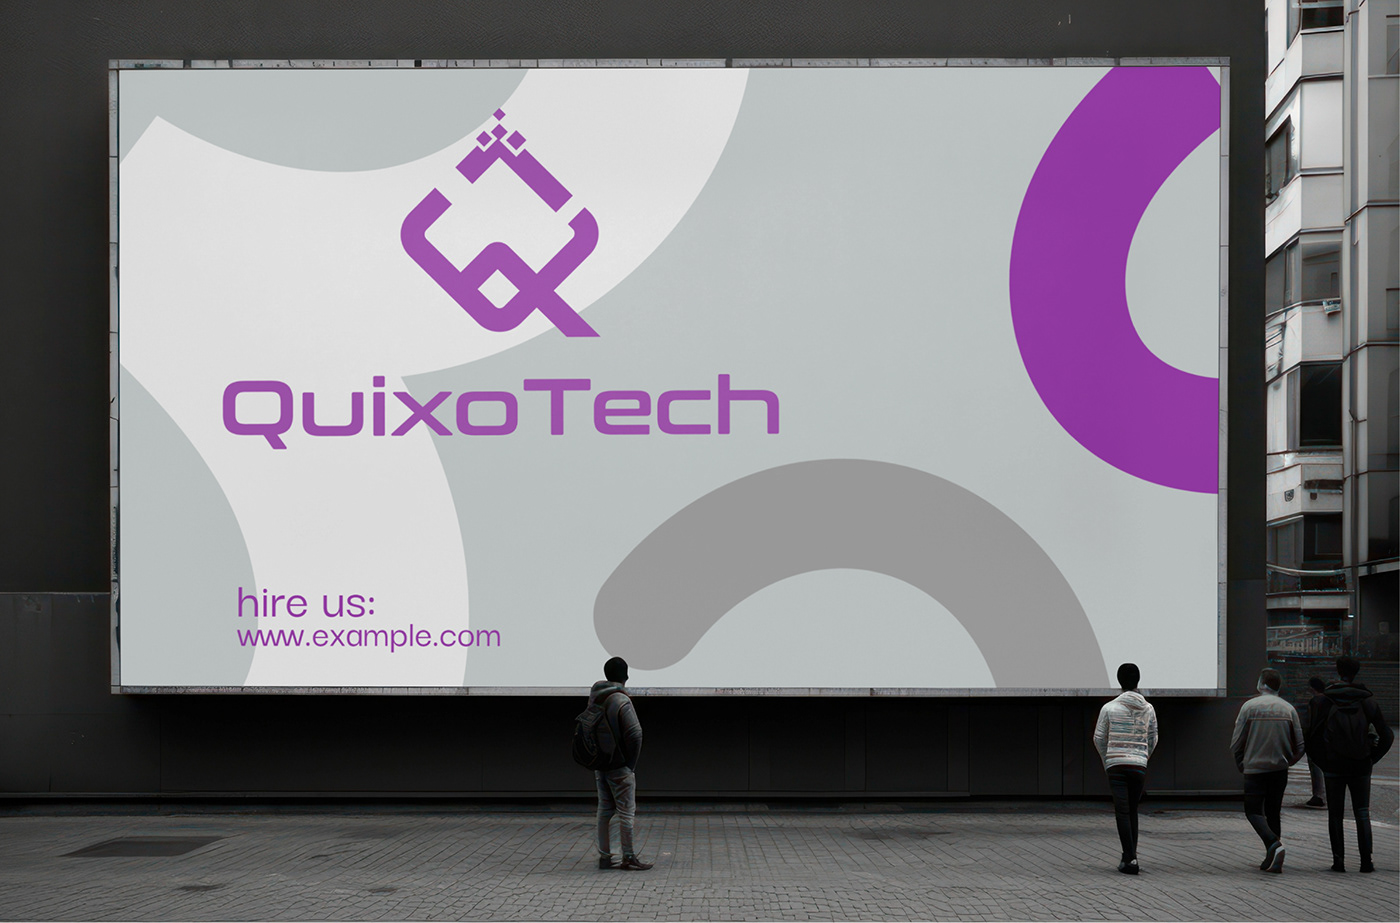 q logo T logo tech Technology technical company logo minimalist modern Logotype Branding Identity